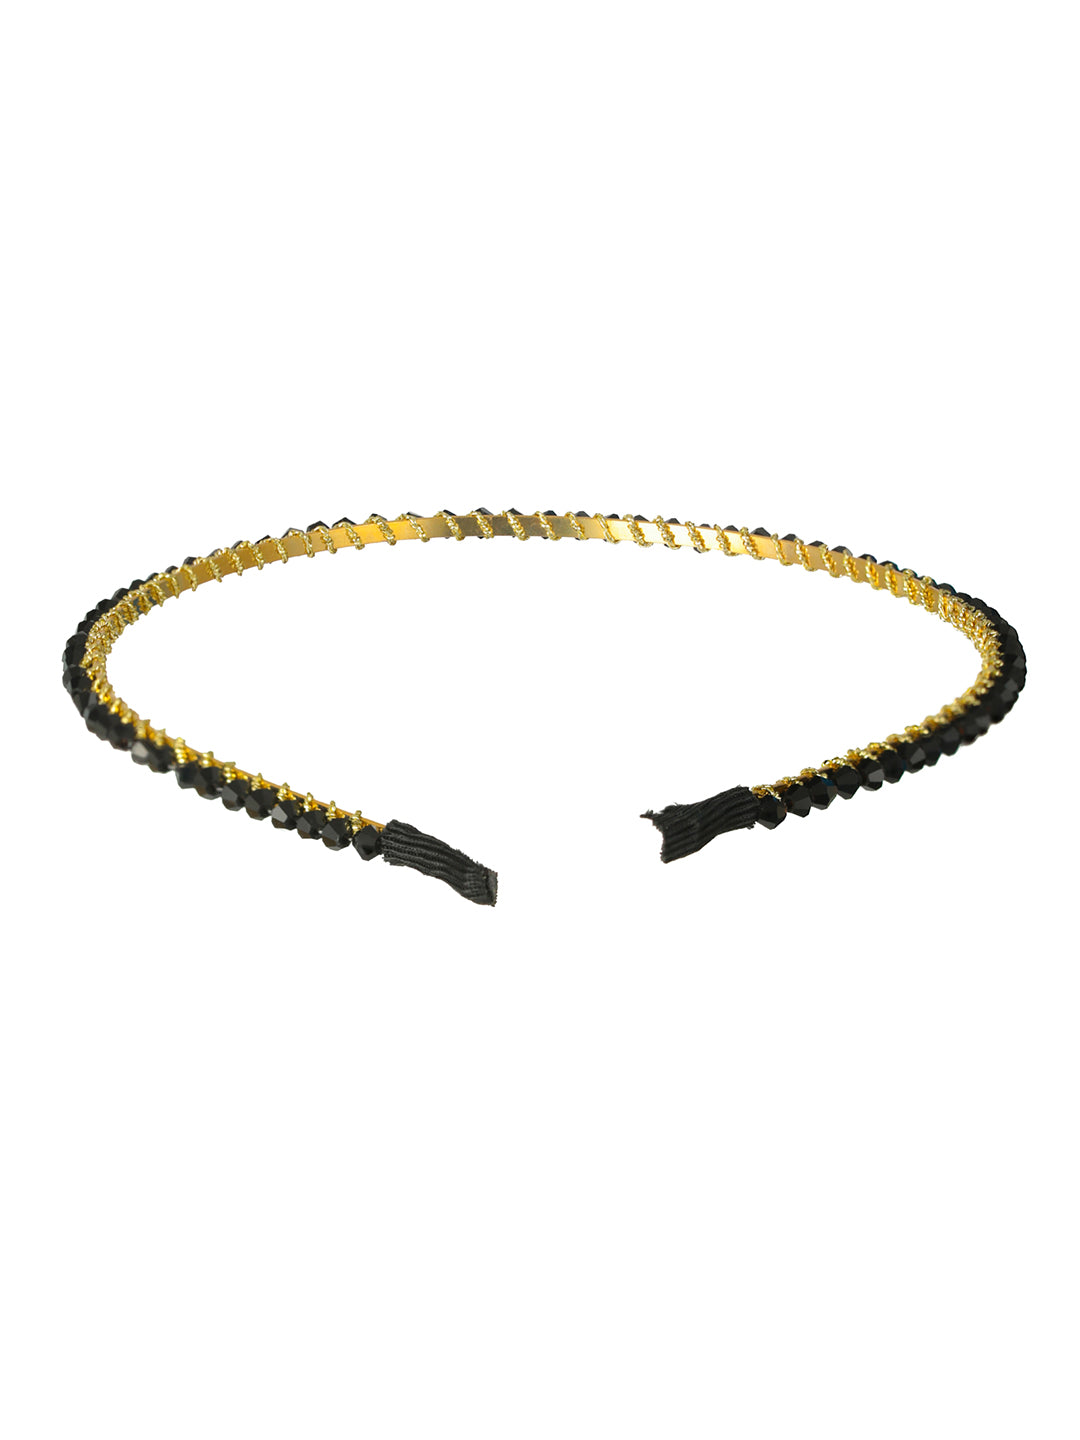 Priyaasi Multicolor Stone Gold-Plated Hair Band Set of 6